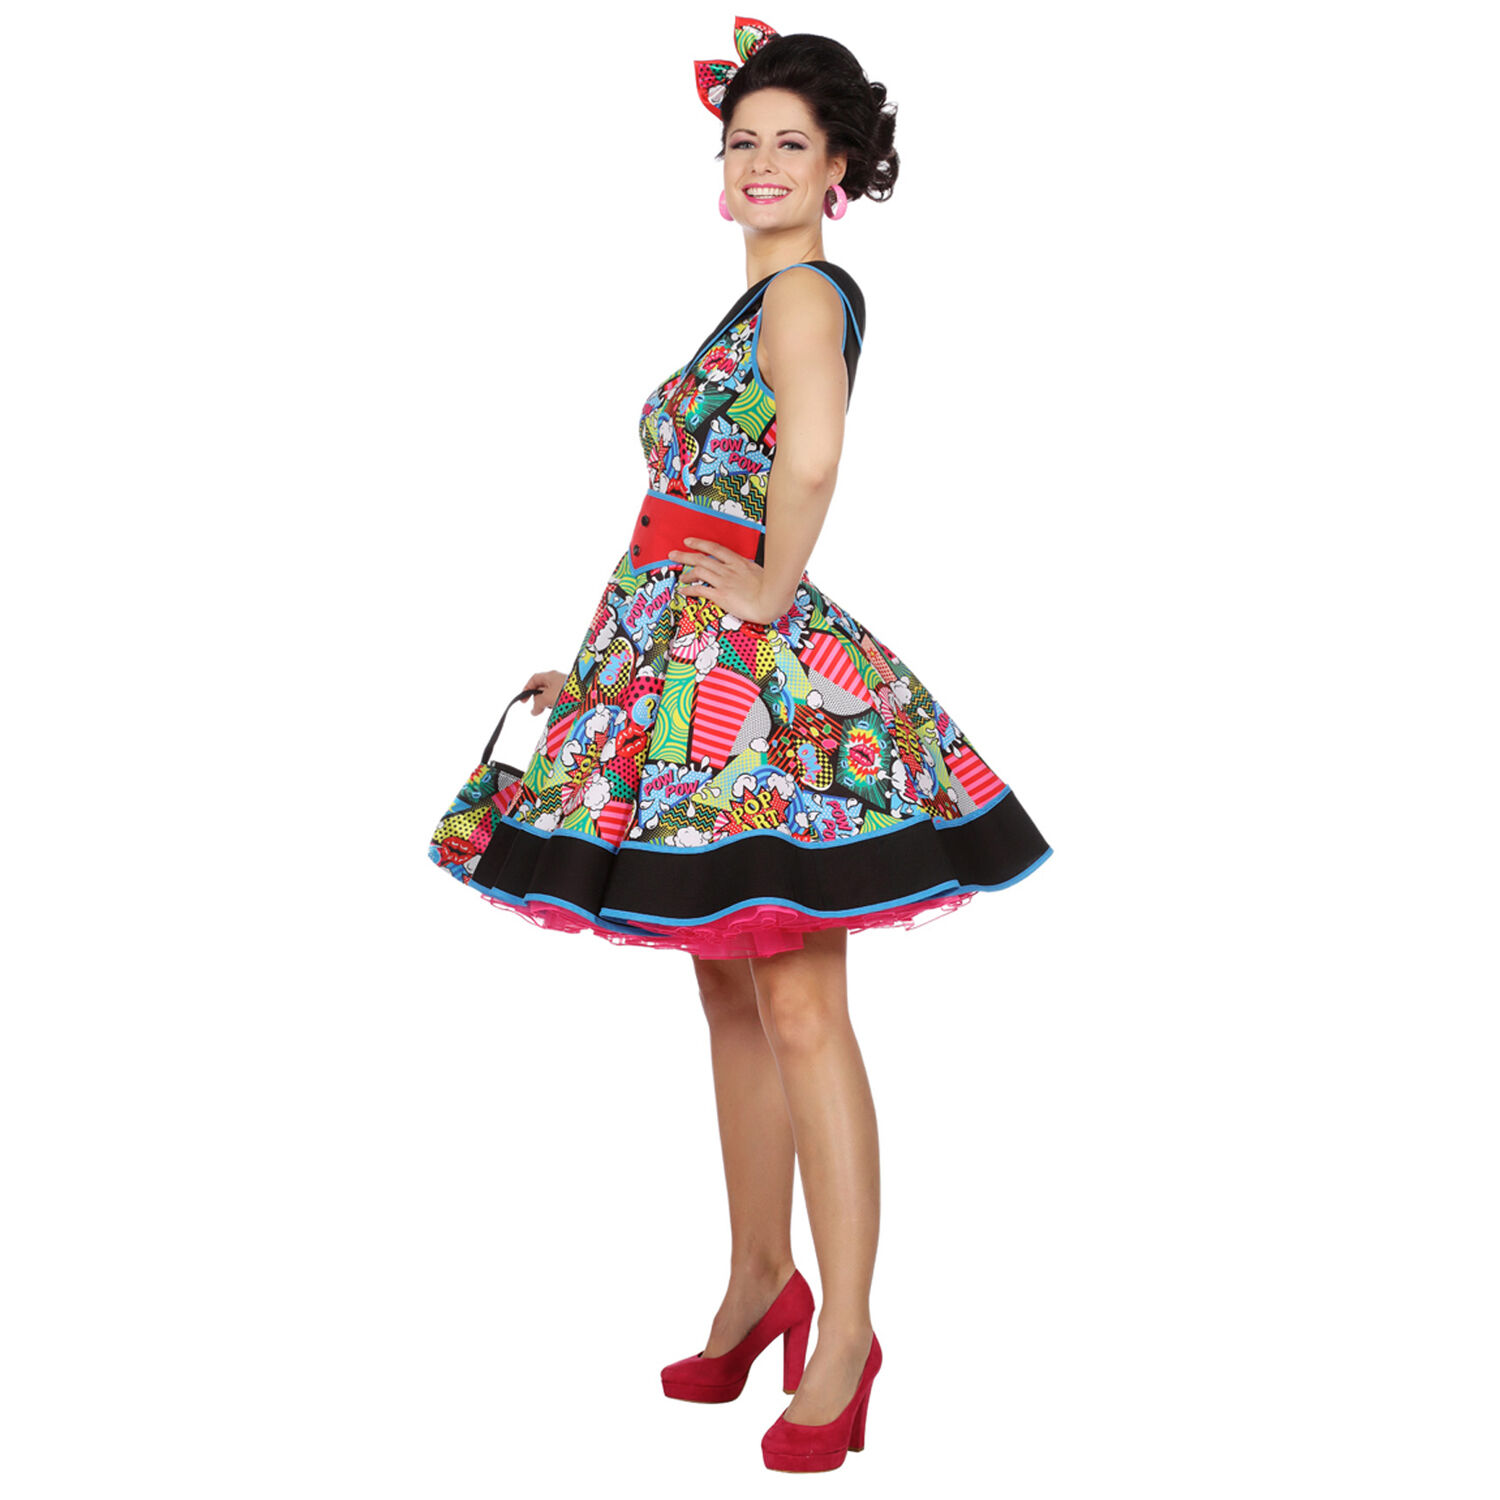 Damen-Kostüm Kleid Pop-Art, Gr. 34 Bild 2